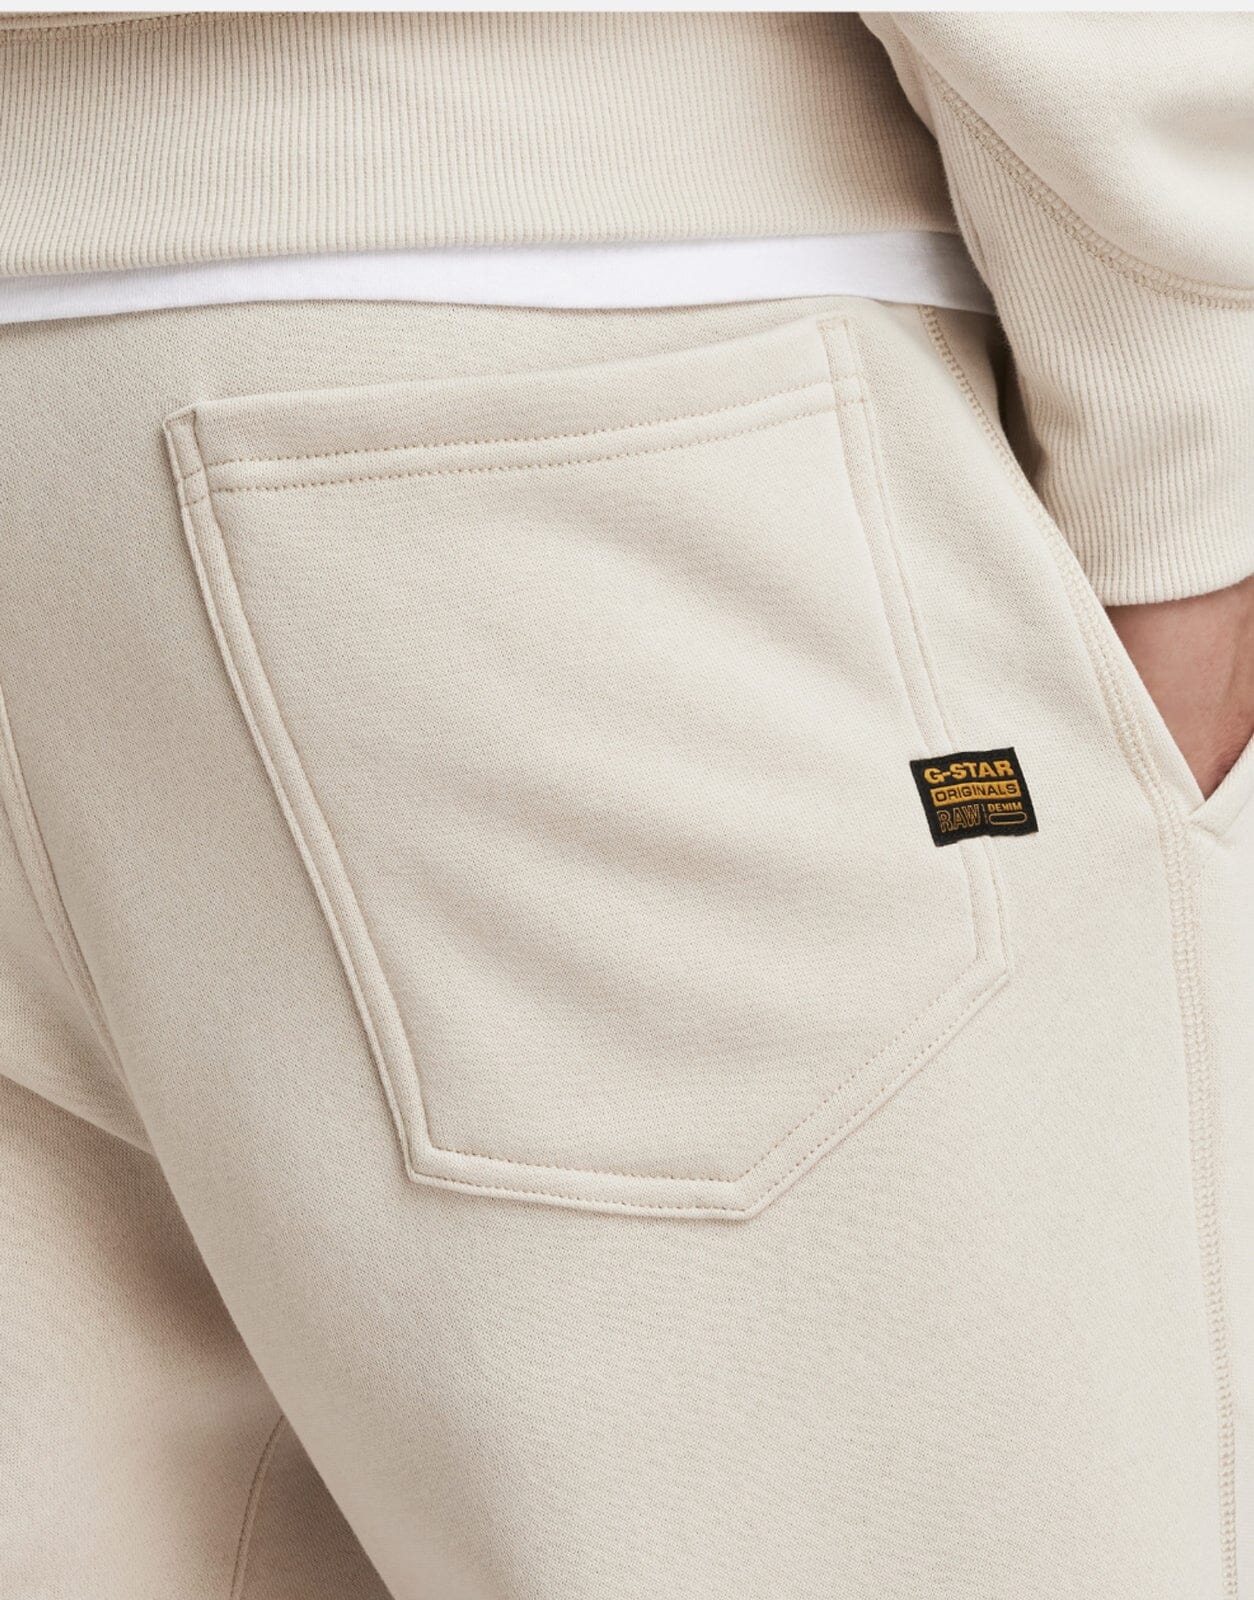 G-Star RAW Premium Core Whitebait Sweatpants - Subwear